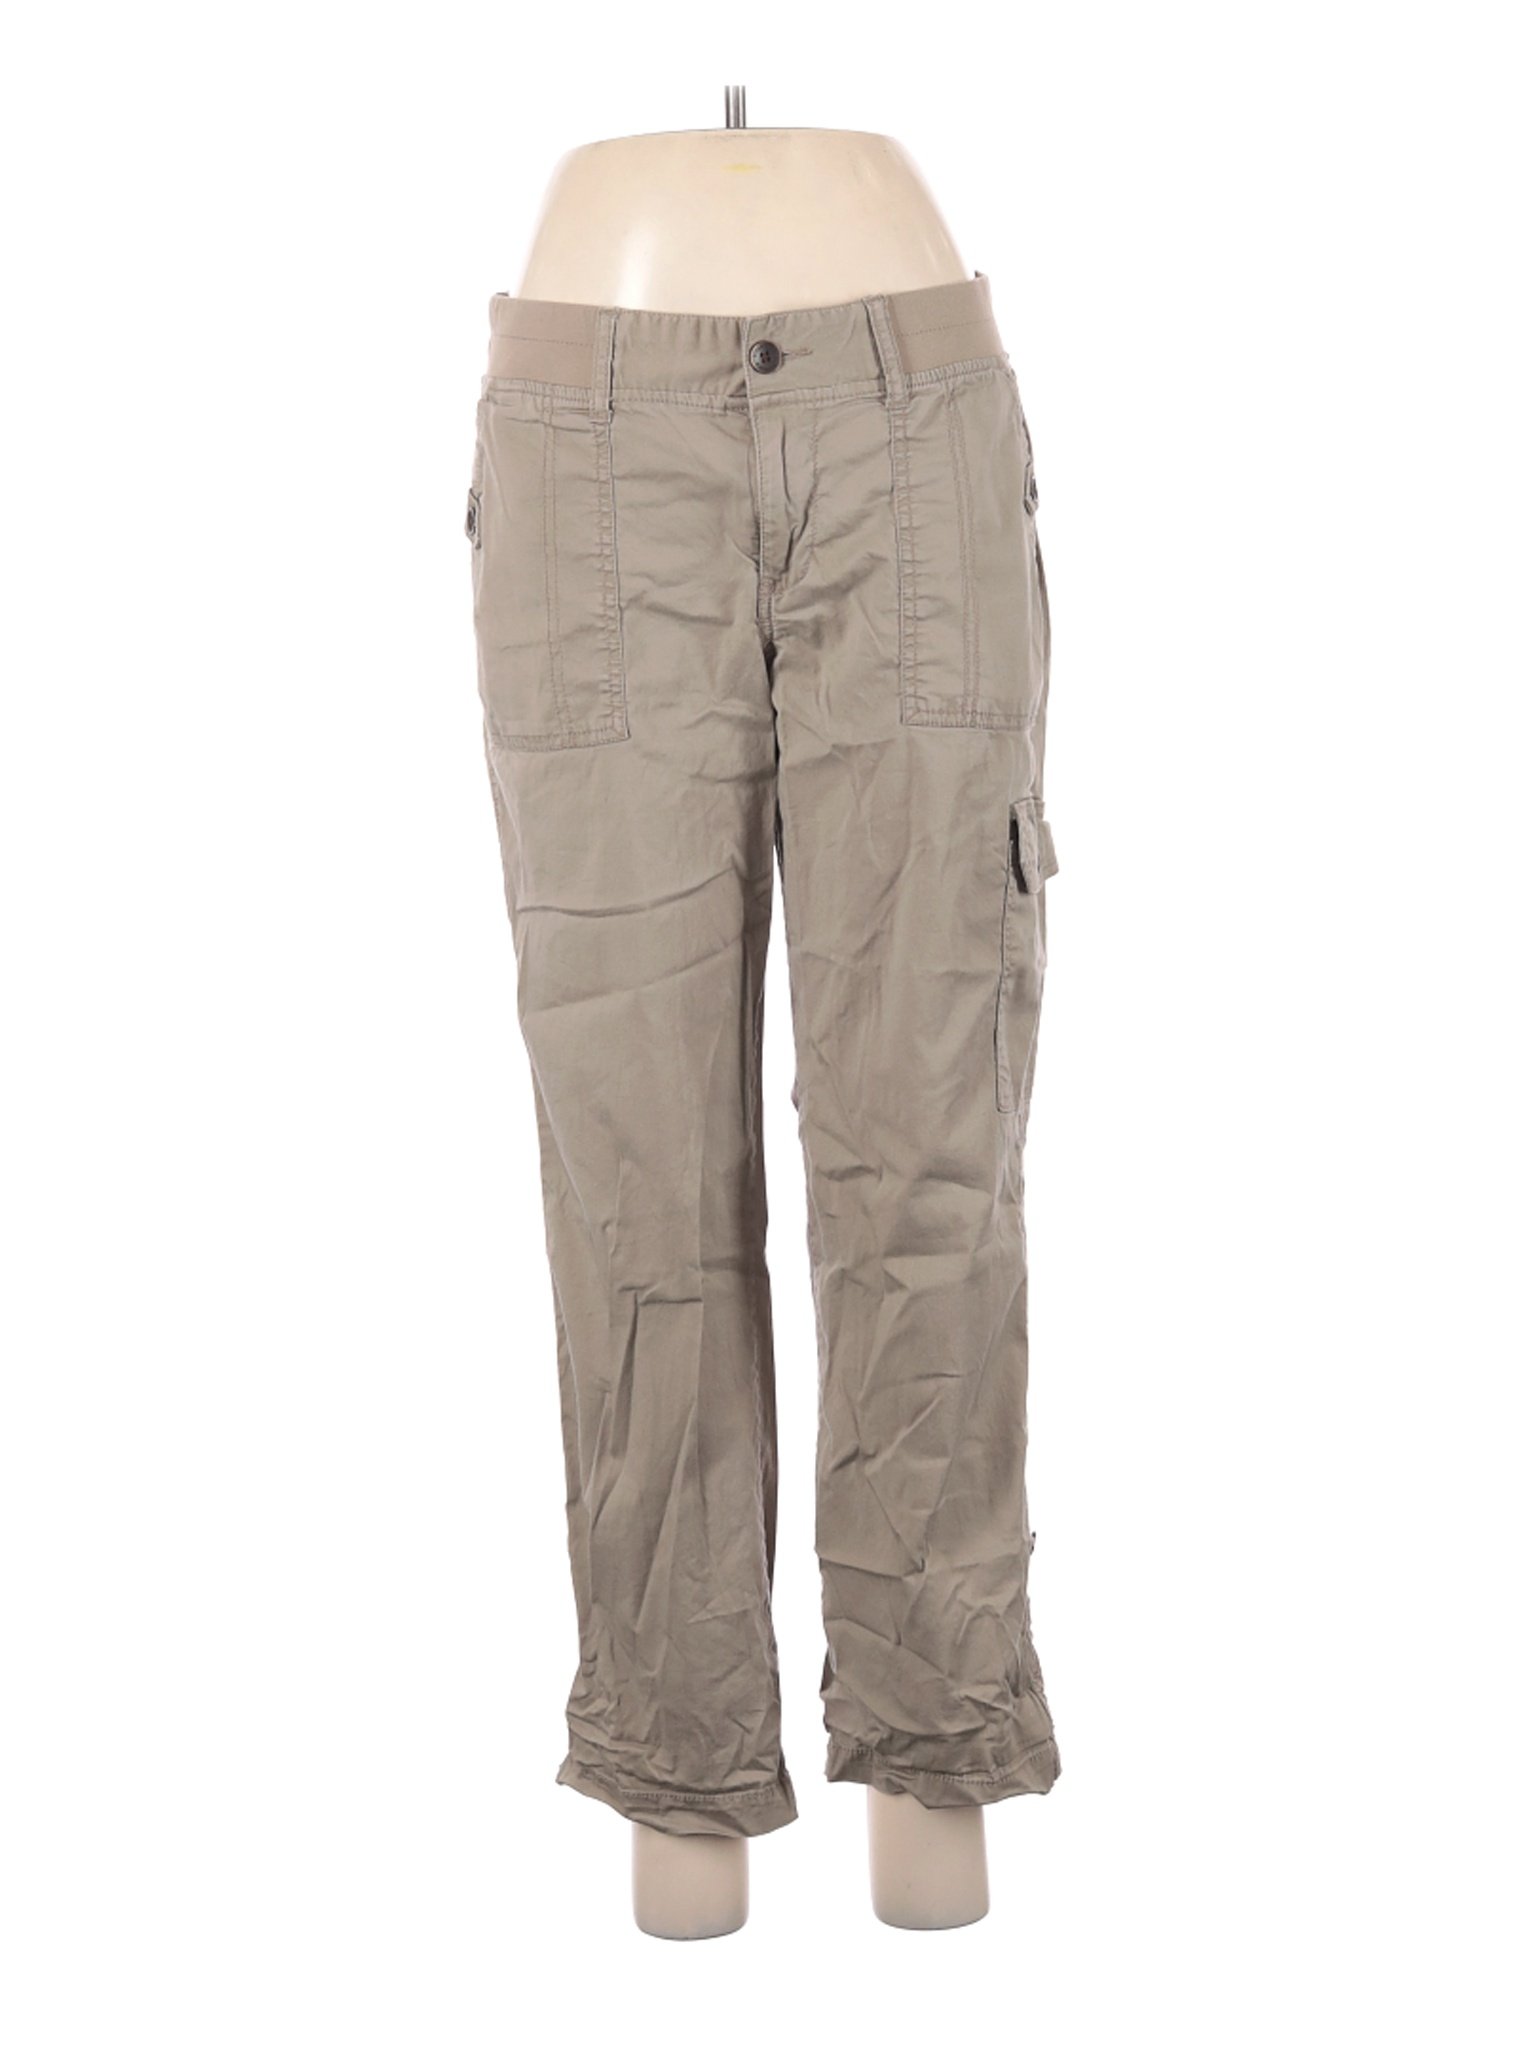 SONOMA life + style Women Brown Cargo Pants 6 | eBay